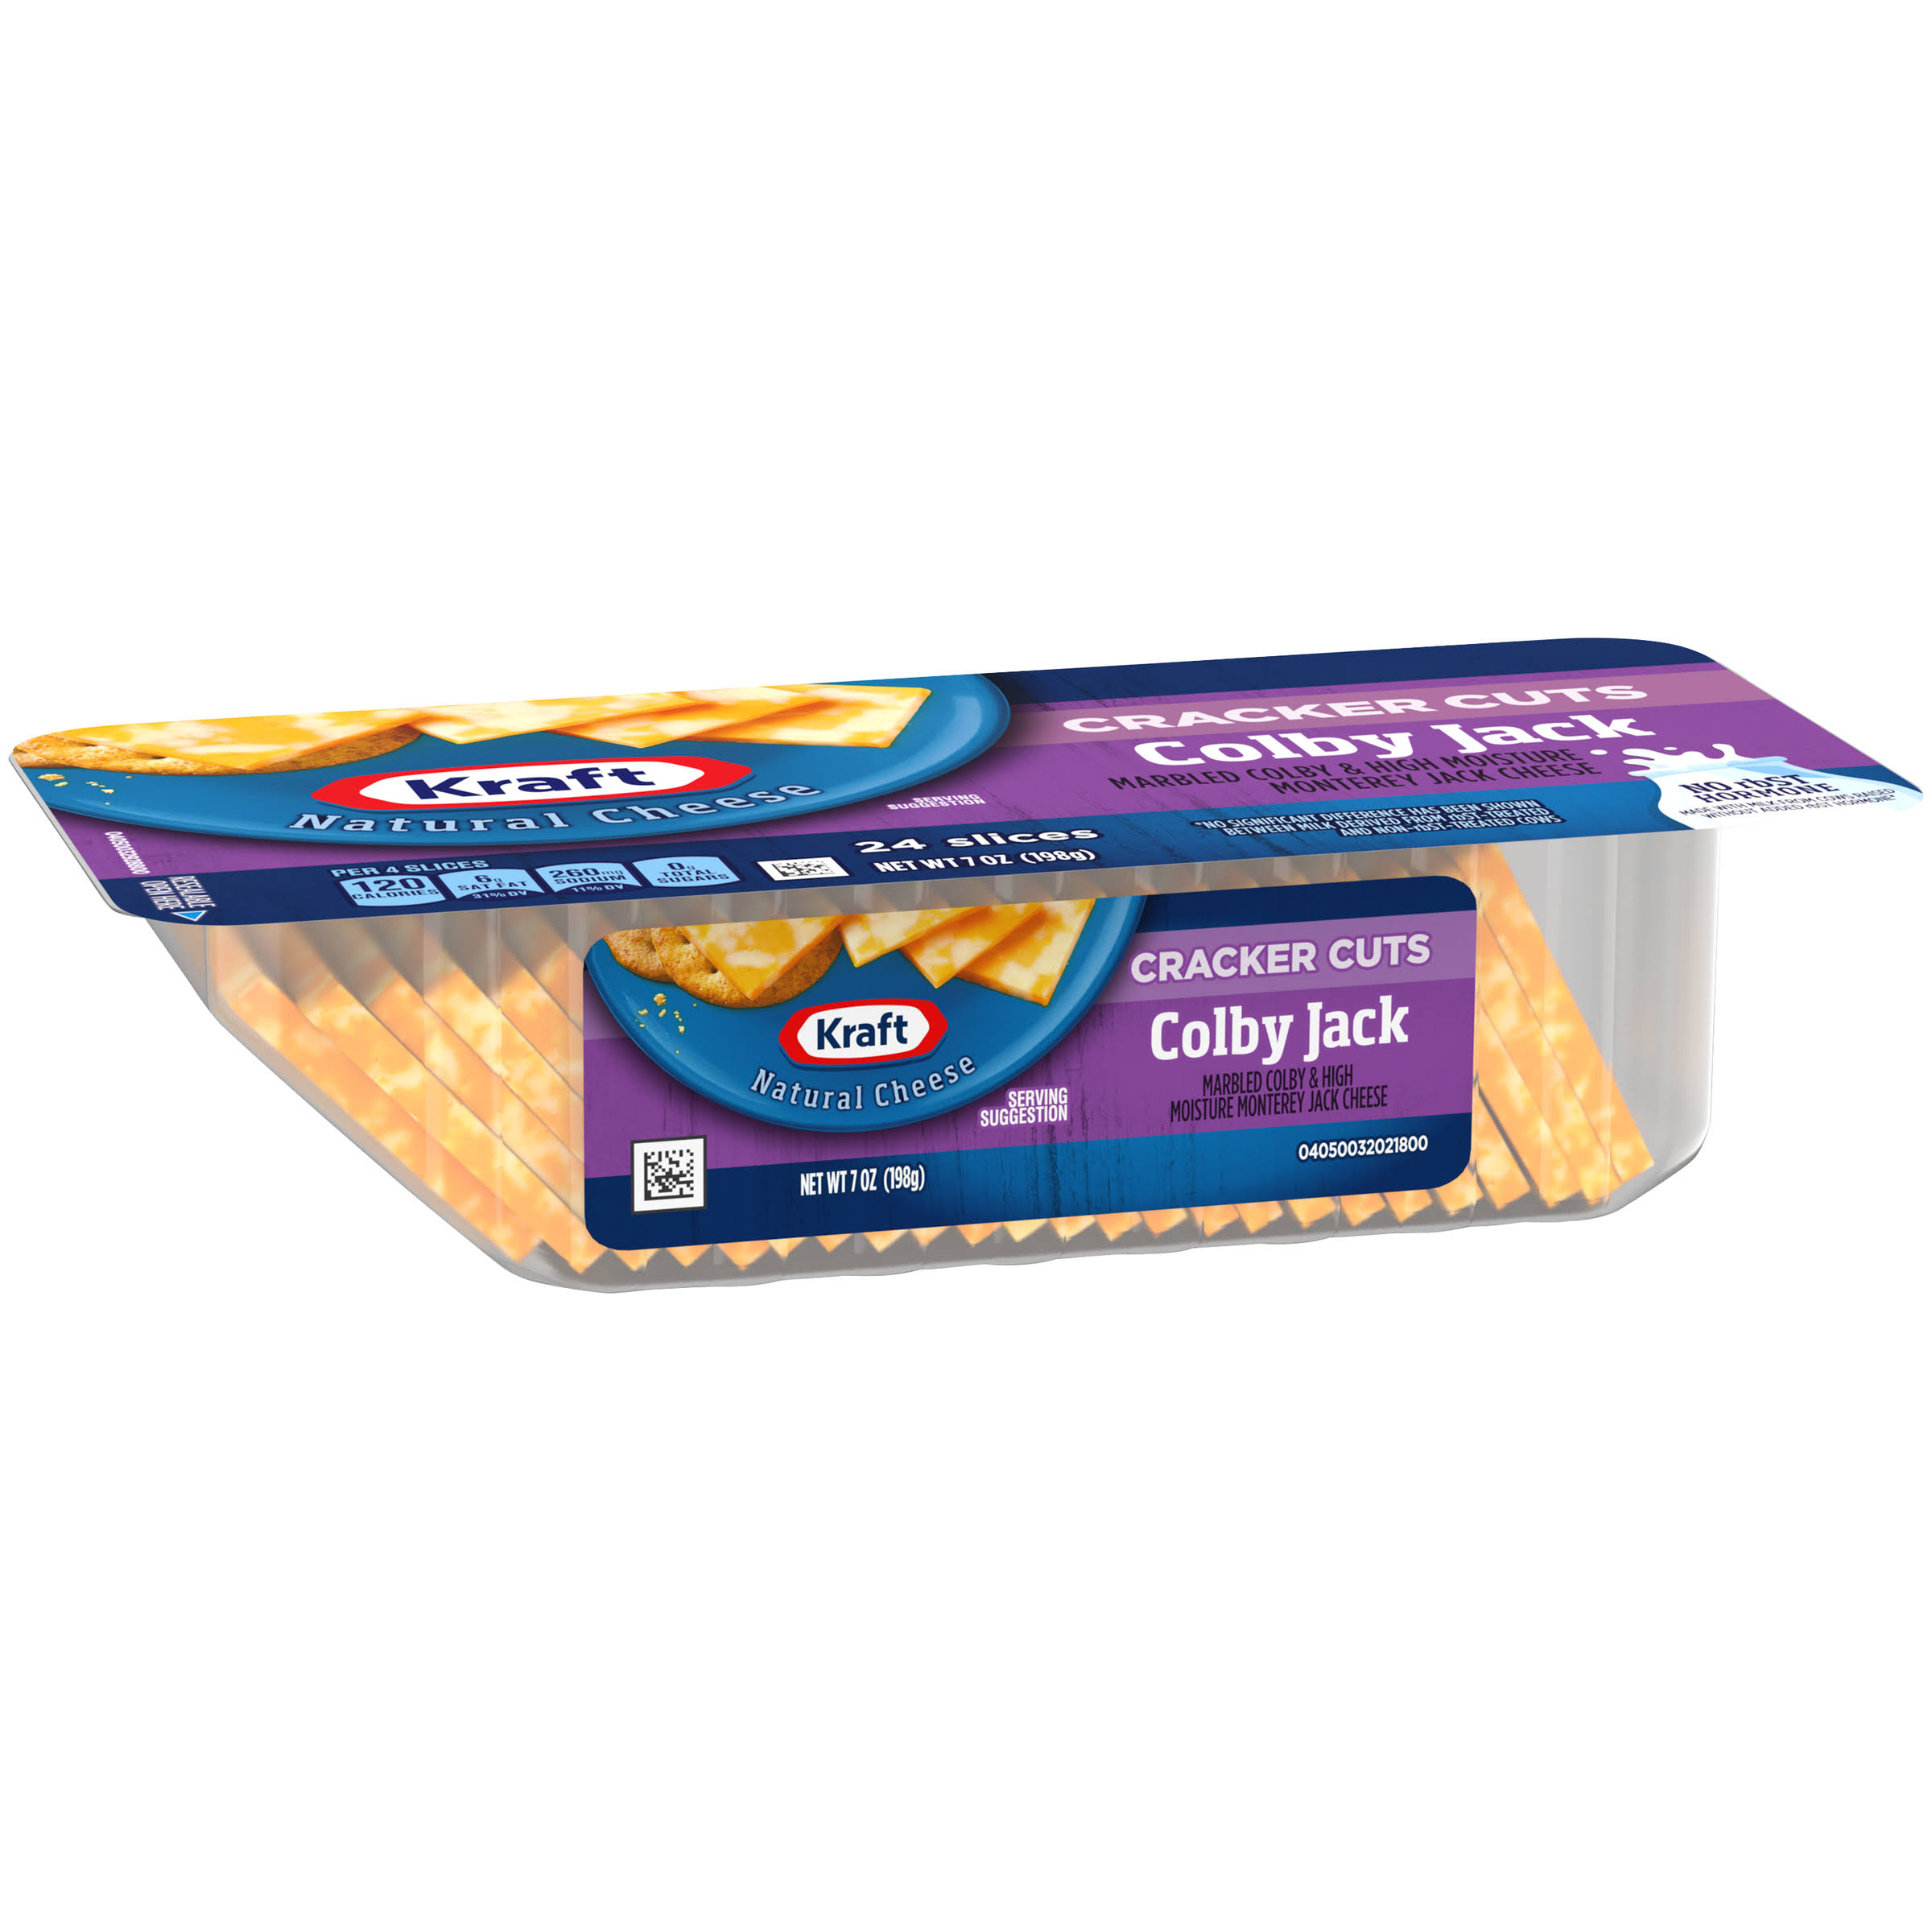 Kraft Colby Jack Cracker Cuts - x24, 7oz